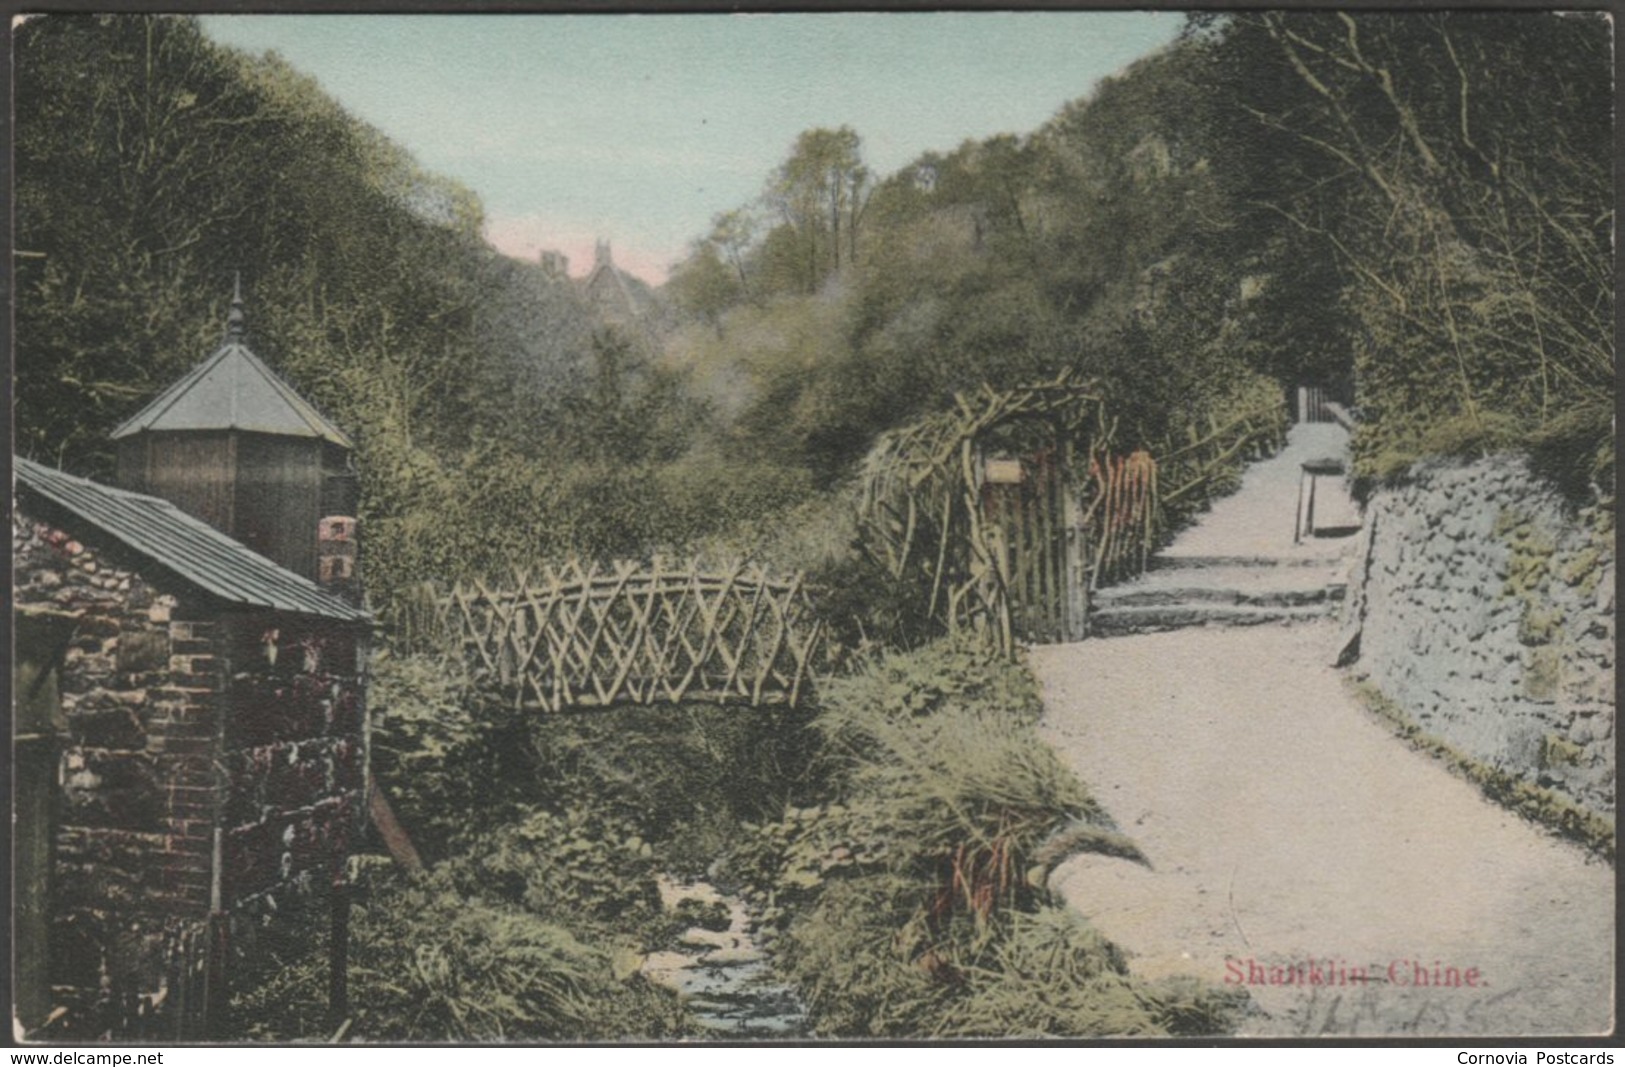 Shanklin Chine, Shanklin, Isle Of Wight, 1905 - Postcard - Shanklin